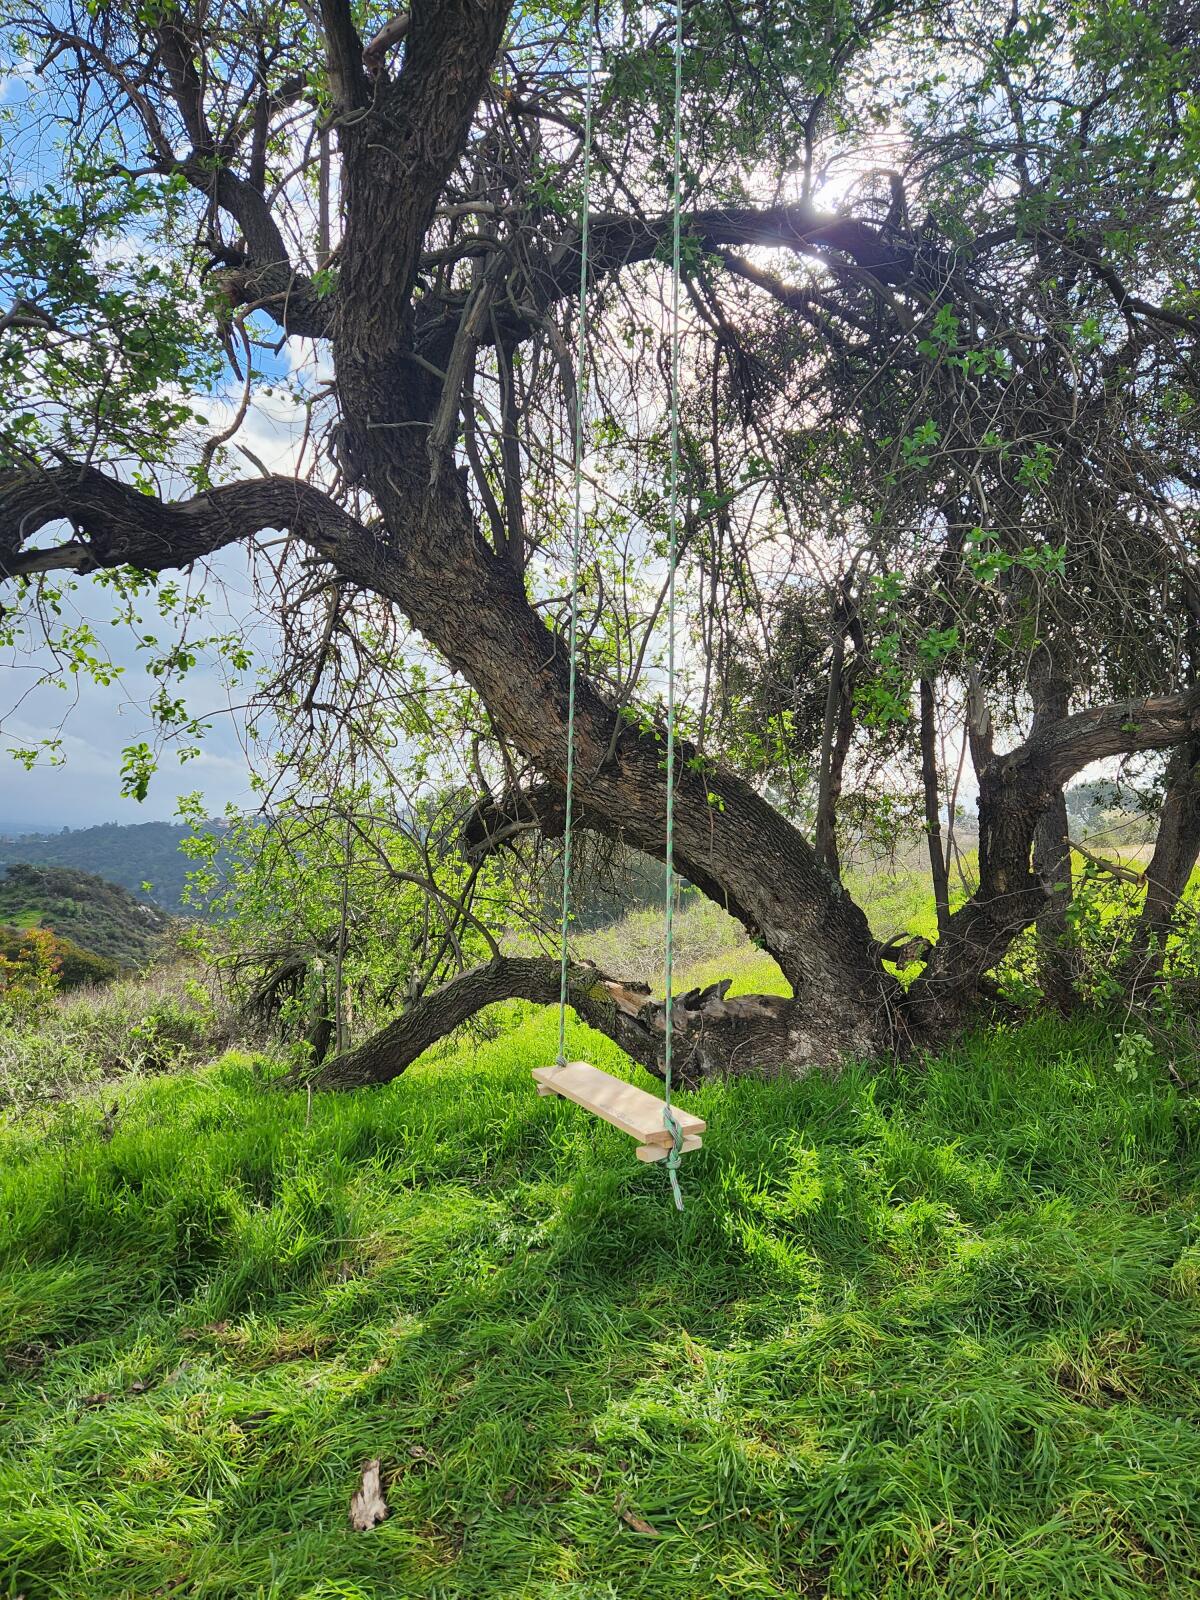 A swing on the Cherry Canyon hiking trail near La Ca?ada Flintridge.